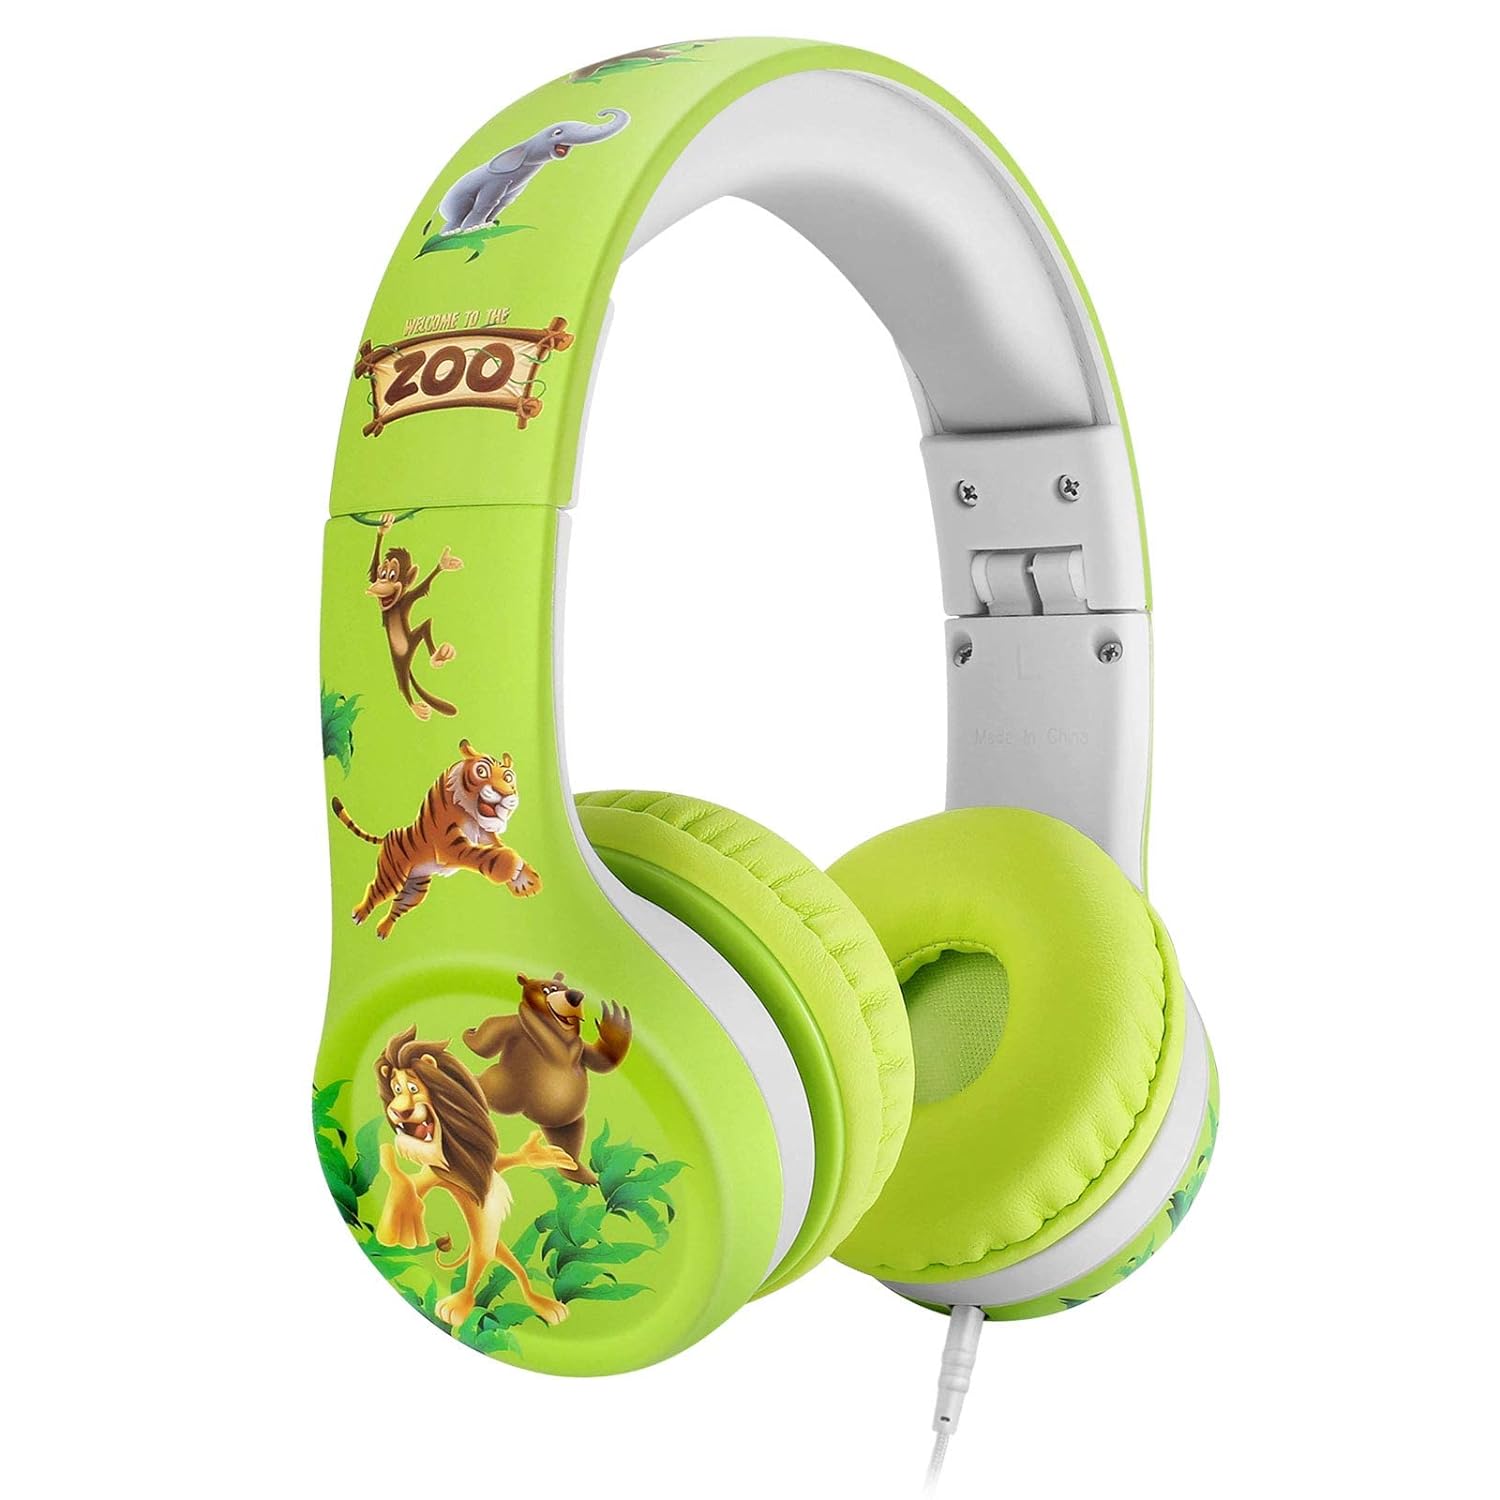 Nenos Kids Headphones Boys Headphones for Kids Over Ear, On Ear Headphones Limited Volume Headset for School, Travel, Computer (Zoo)